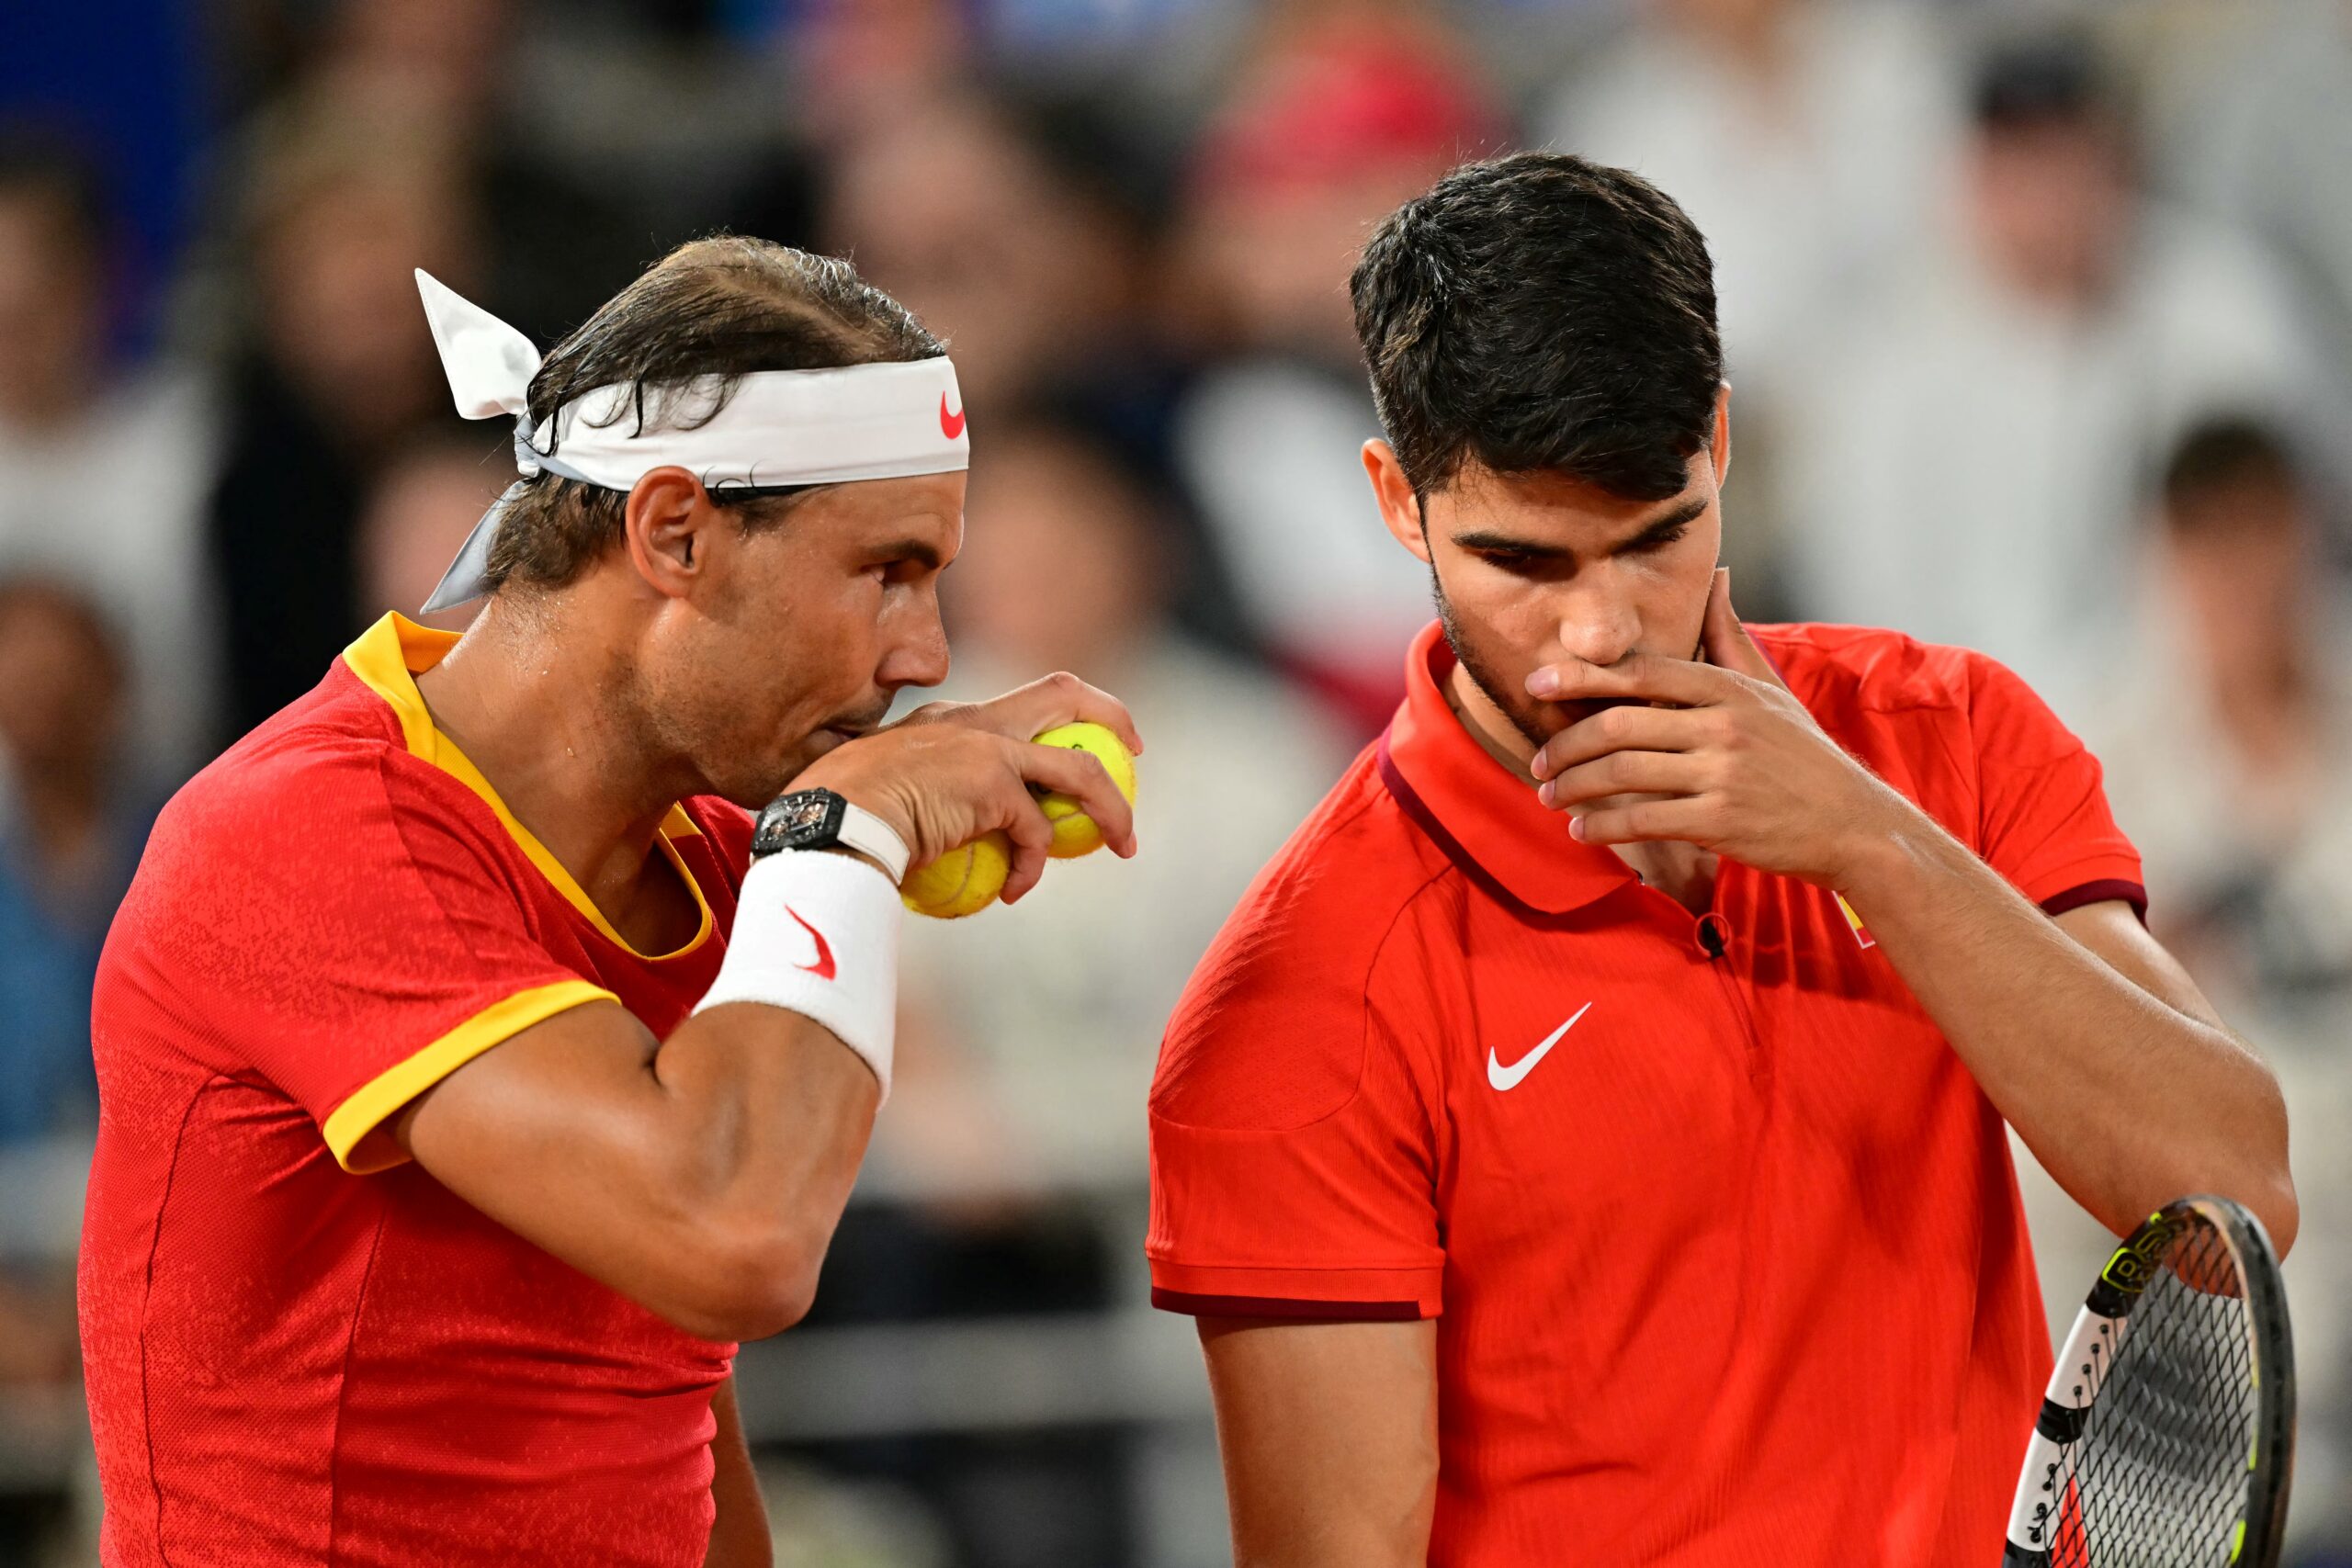 Rafa Nadal, indignat înainte de meciul cu ungurul Fucsovics: "E revoltător!"